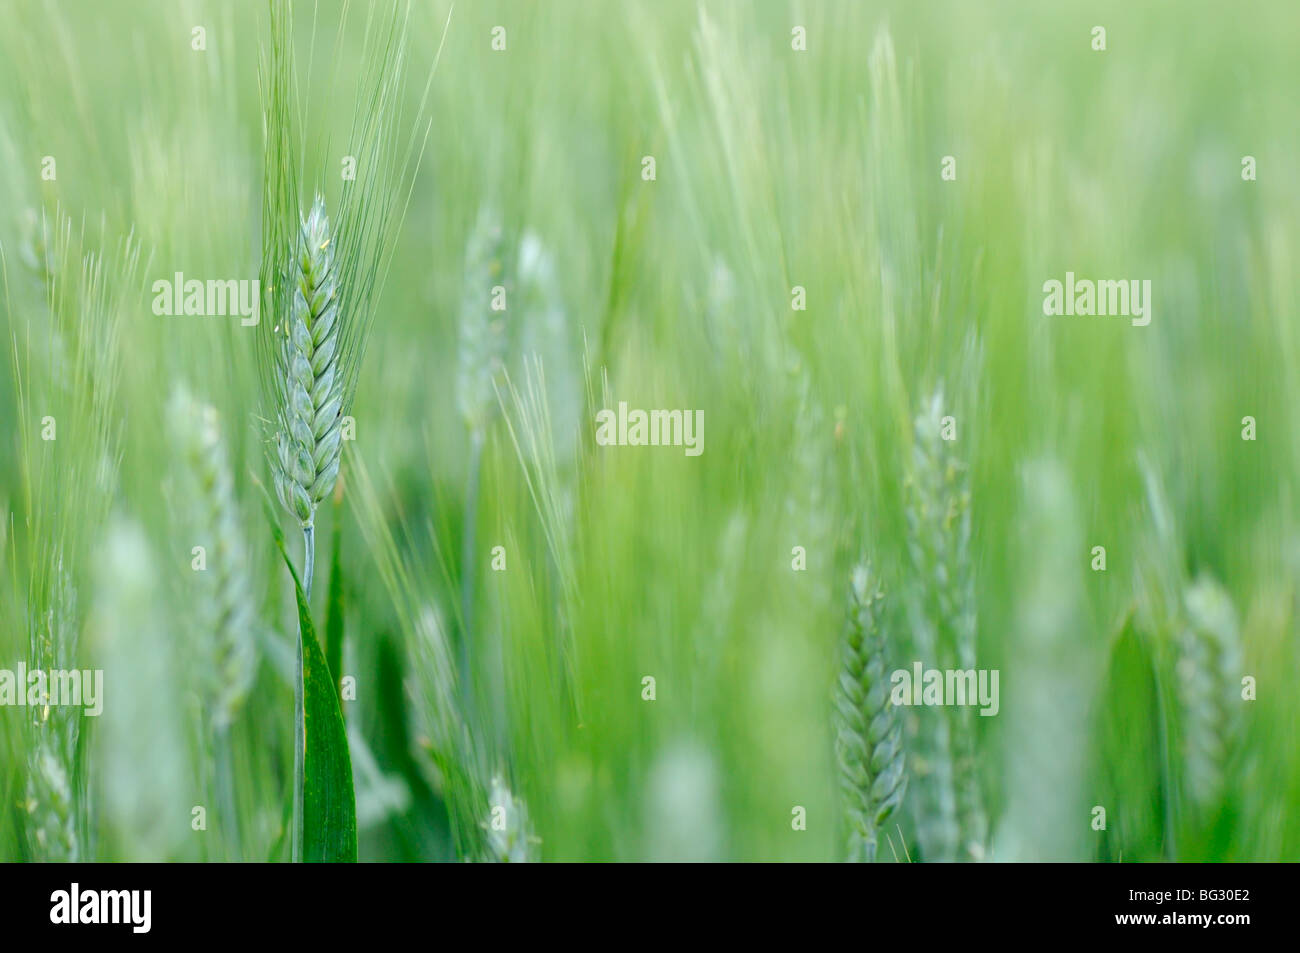 Image of wheat Stock Photo